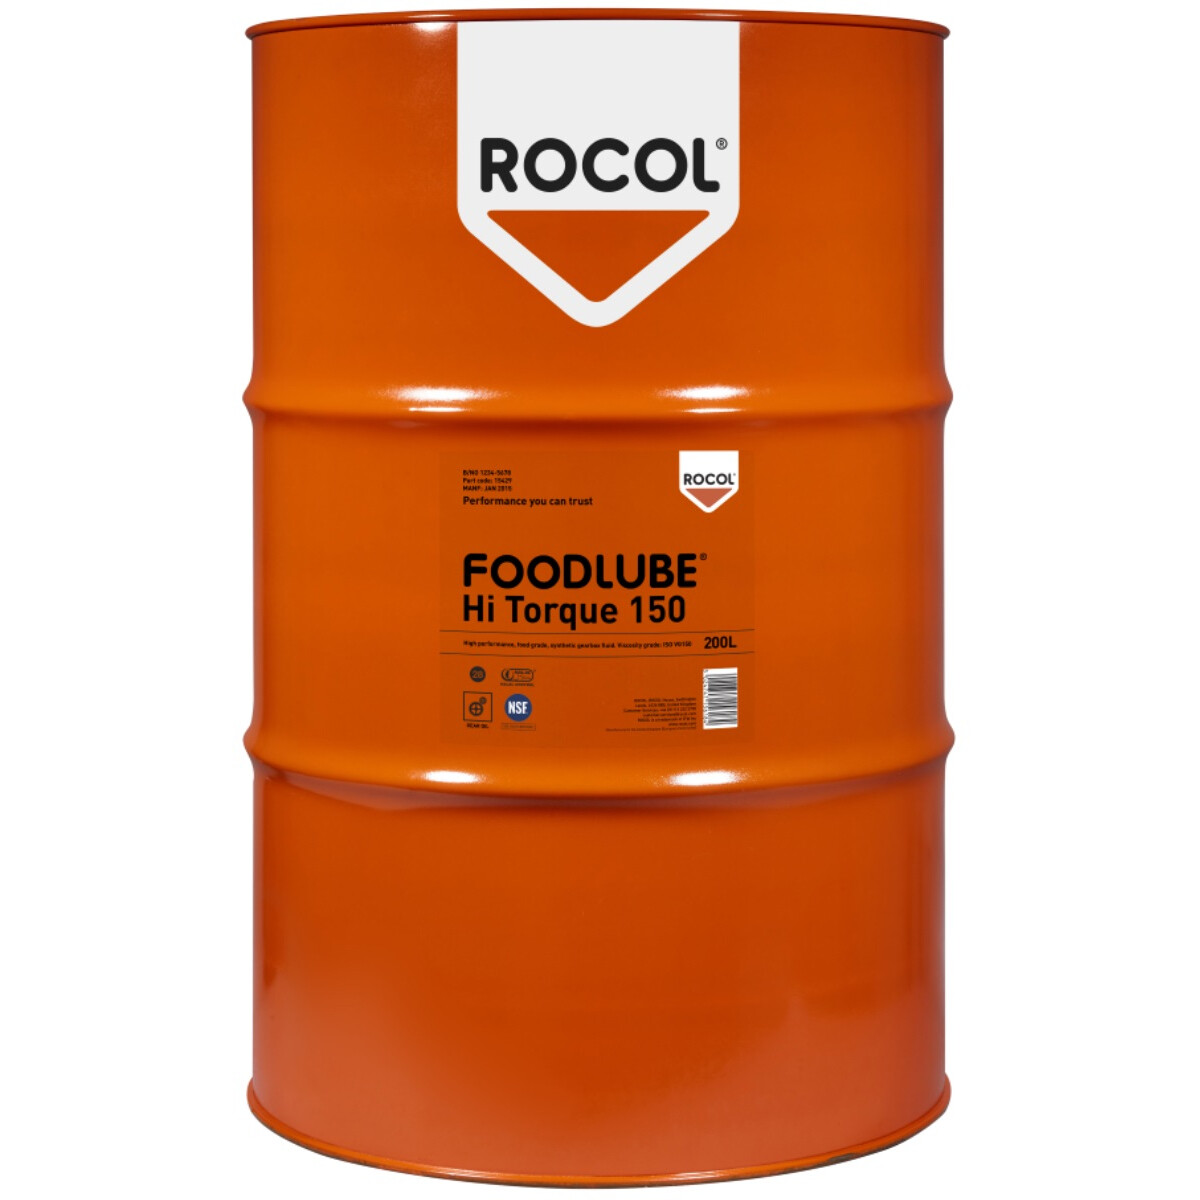 Rocol 15425 Foodlube Hi Torque 150食用宝齿轮箱油